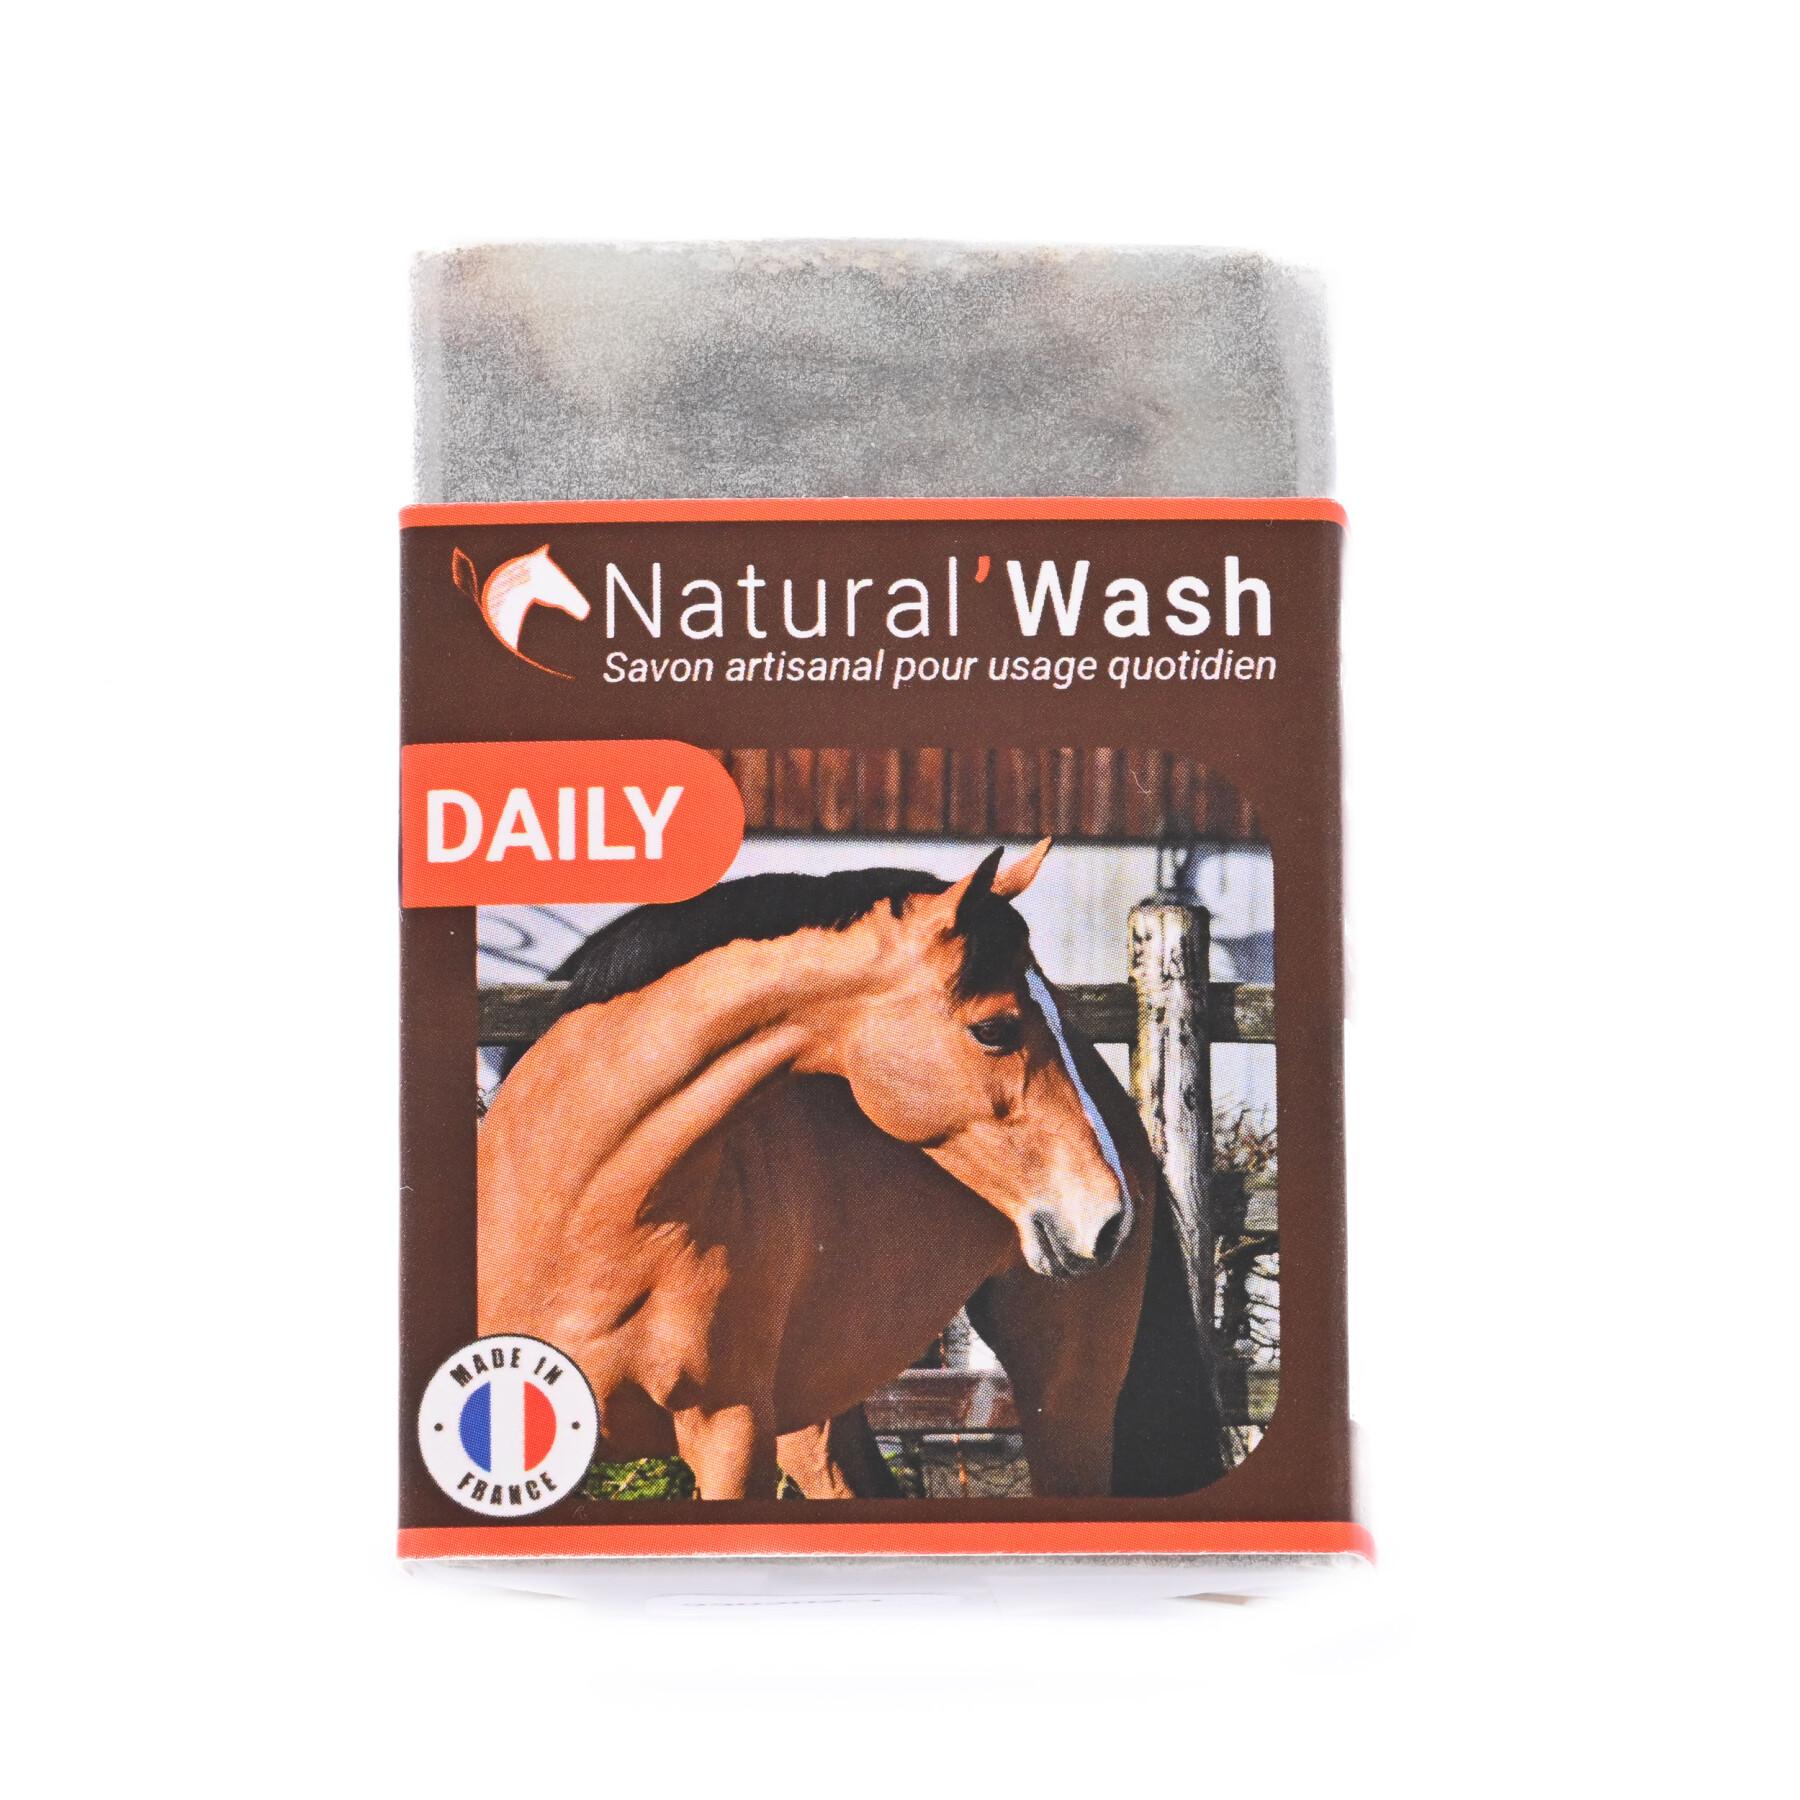 Handgemachte Seife natural'wash daily - 100 g Natural Innov